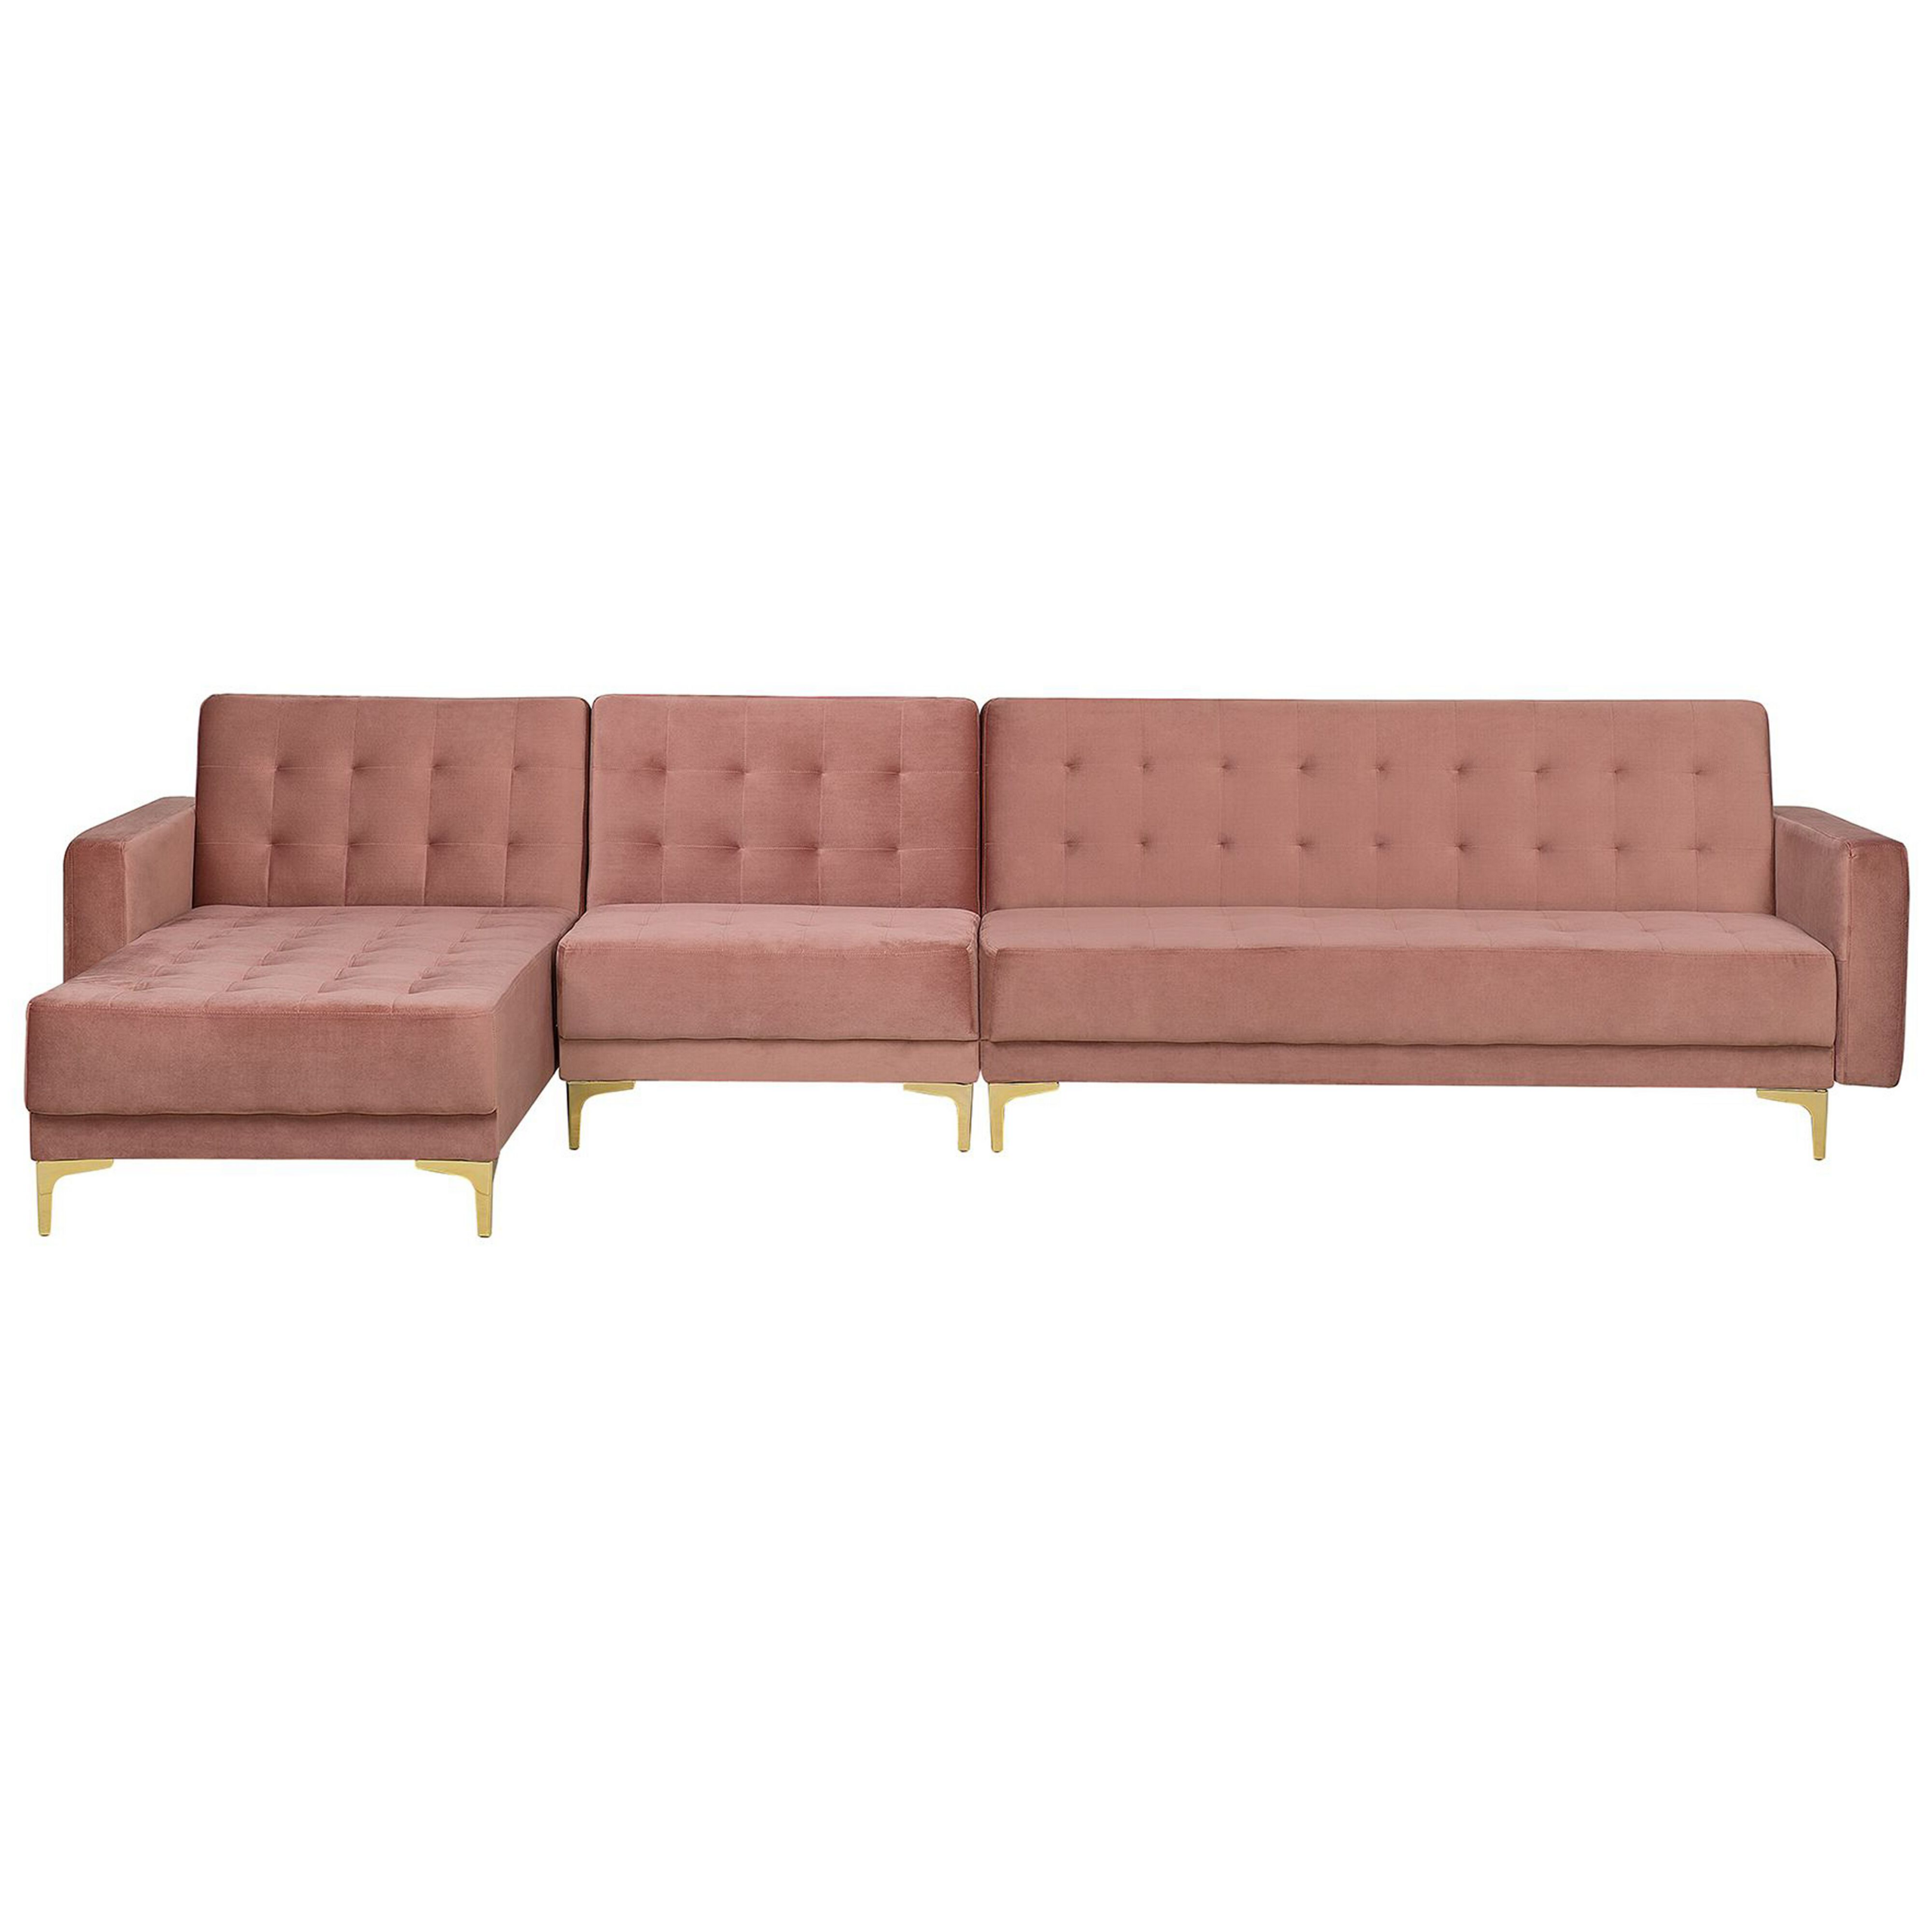 Beliani Corner Sofa Bed Pink Velvet Tufted Fabric Modern L-Shaped Modular 5 Seater Left Hand Chaise Longue